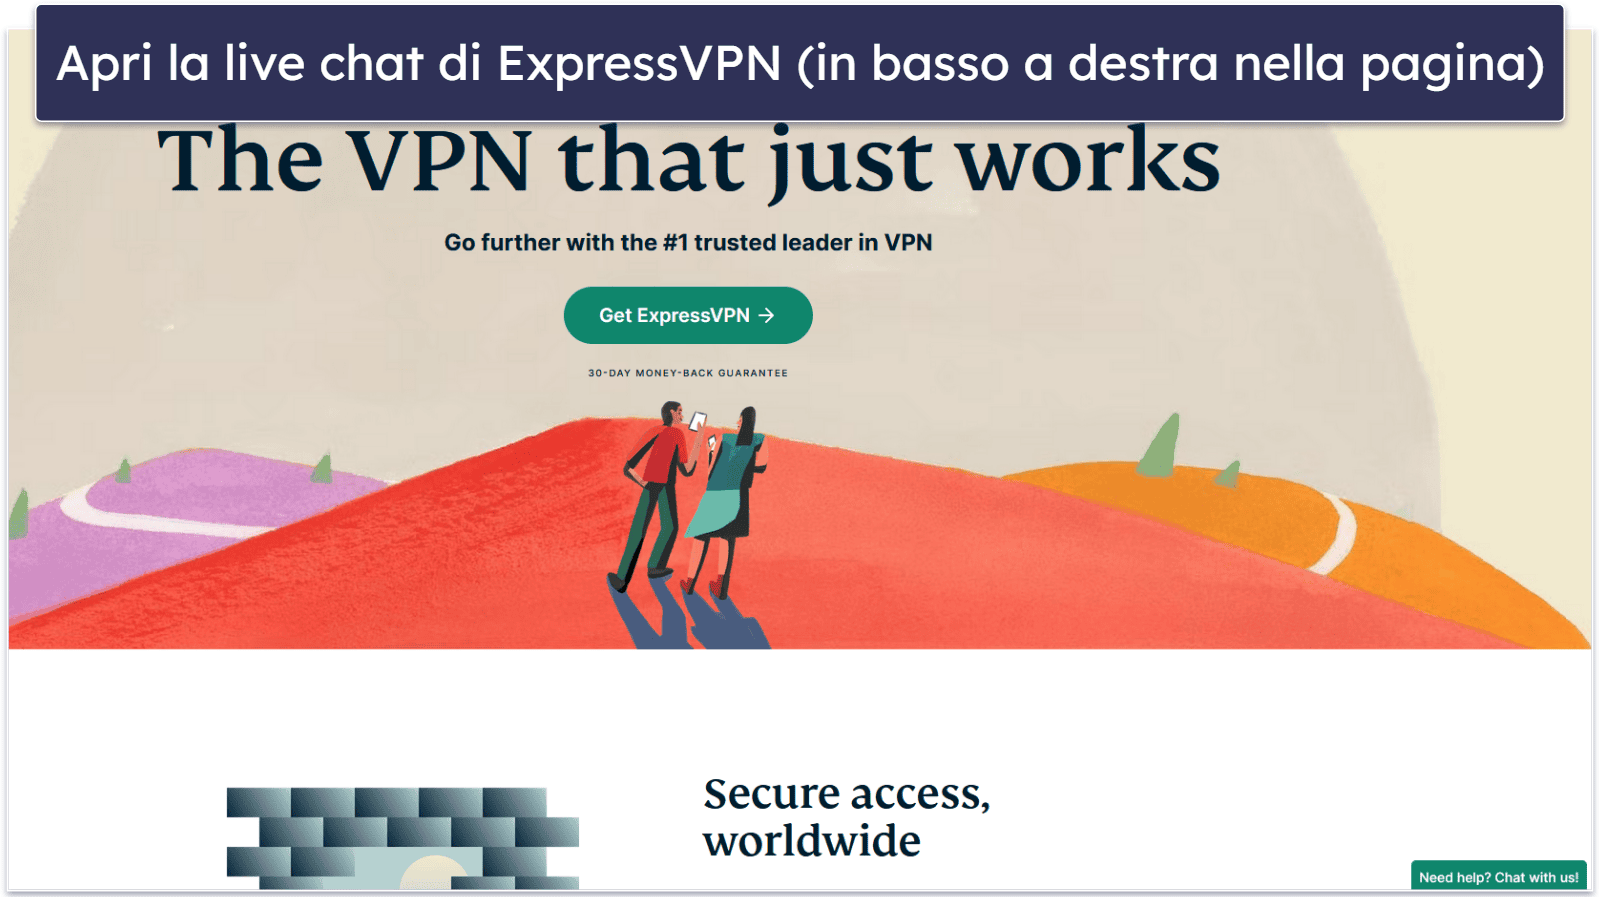 Prova ExpressVPN senza rischi per 30 giorni (guida passo-passo)